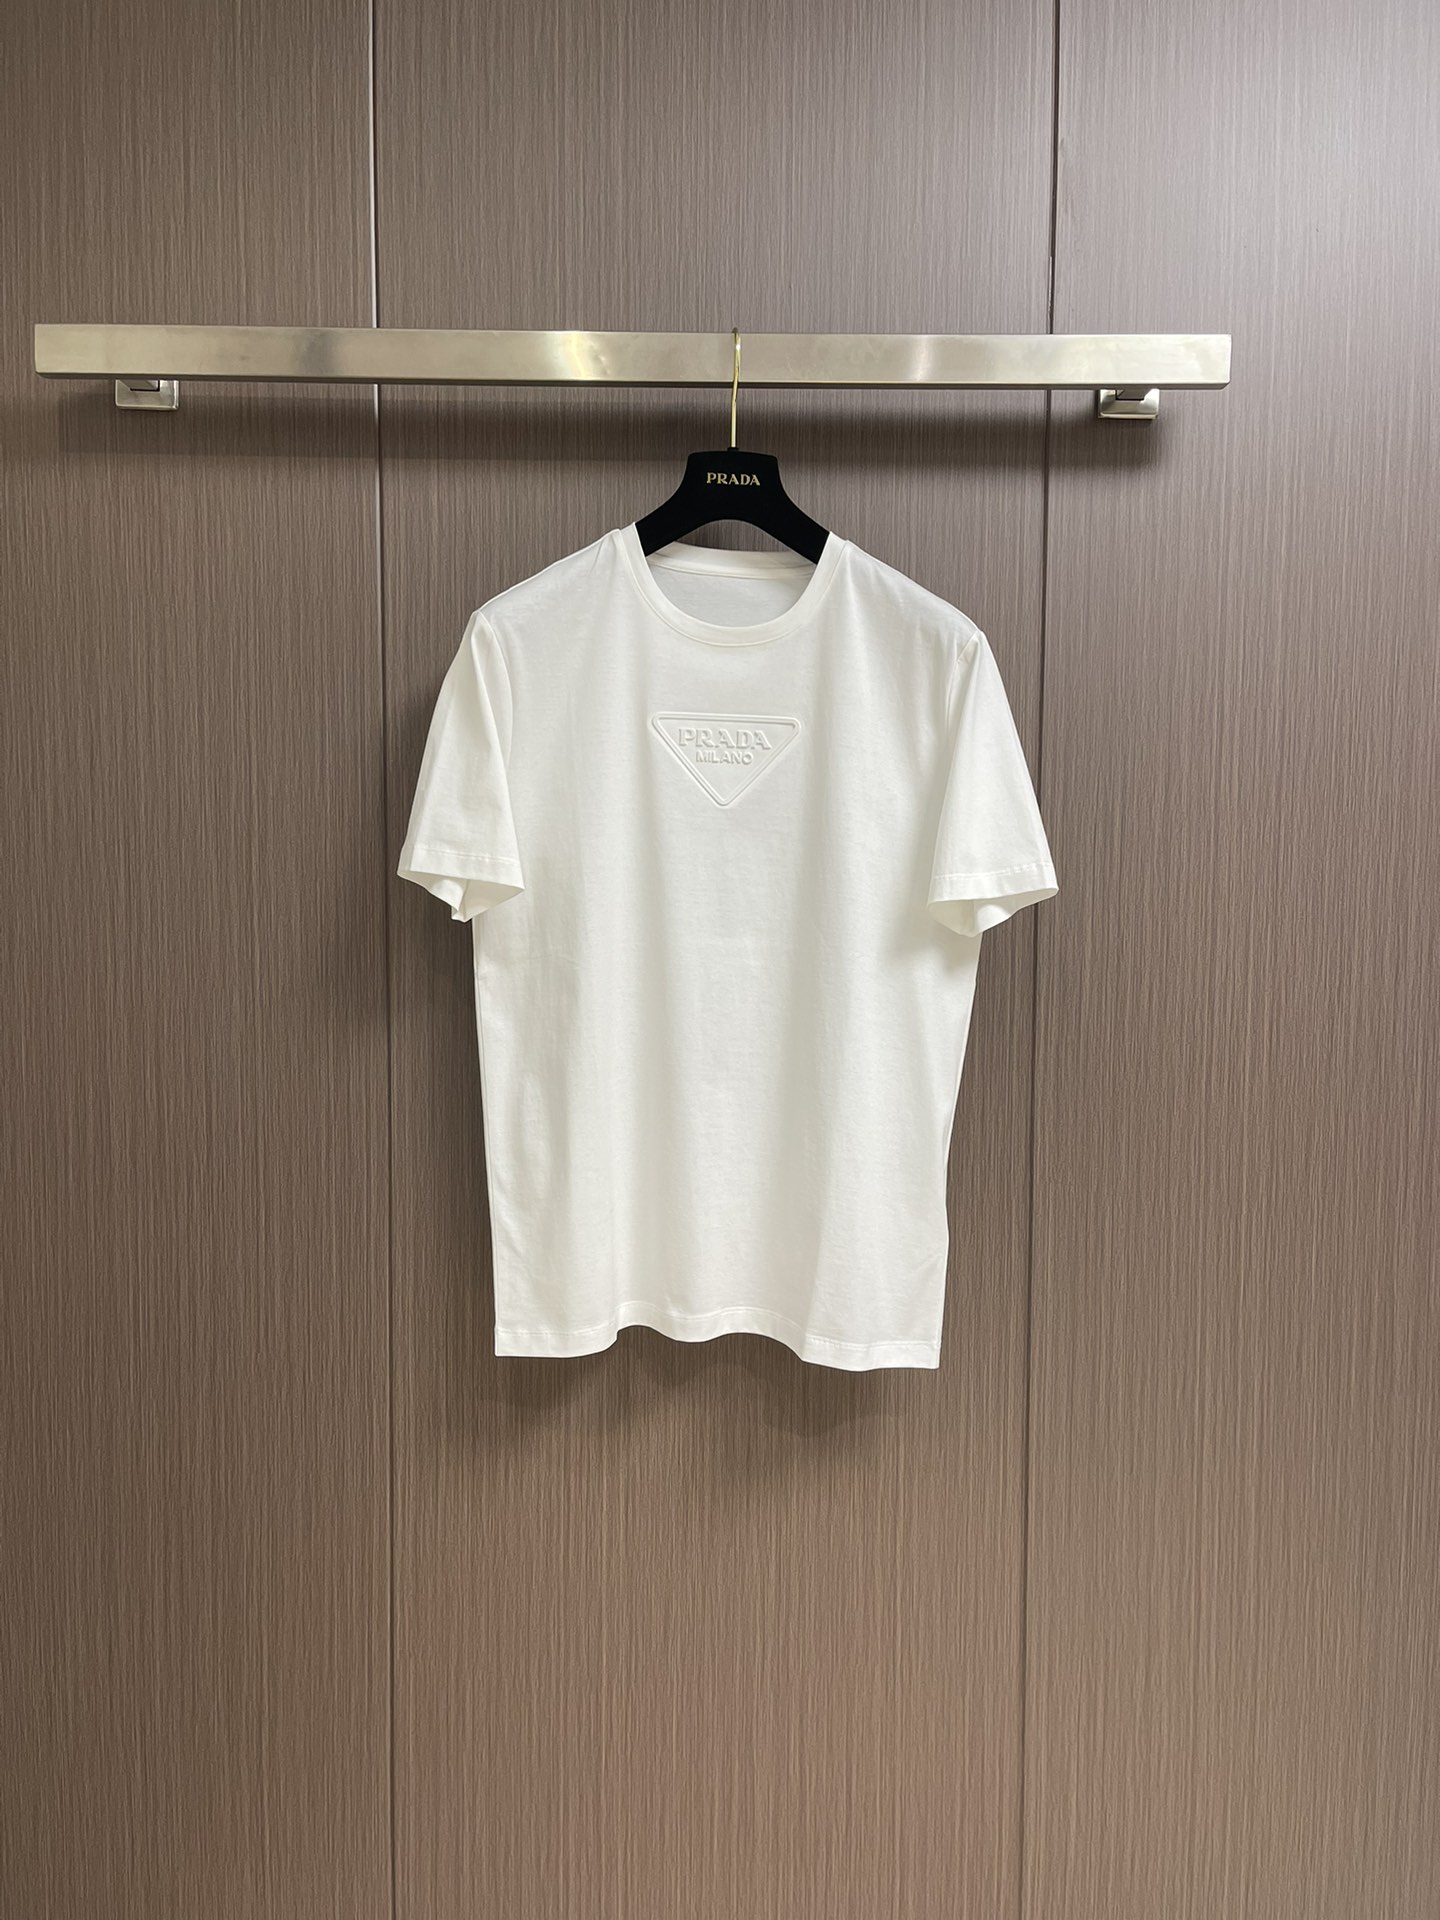 Prada Clothing T-Shirt Cotton Mercerized Nylon Spring Collection Fashion Short Sleeve